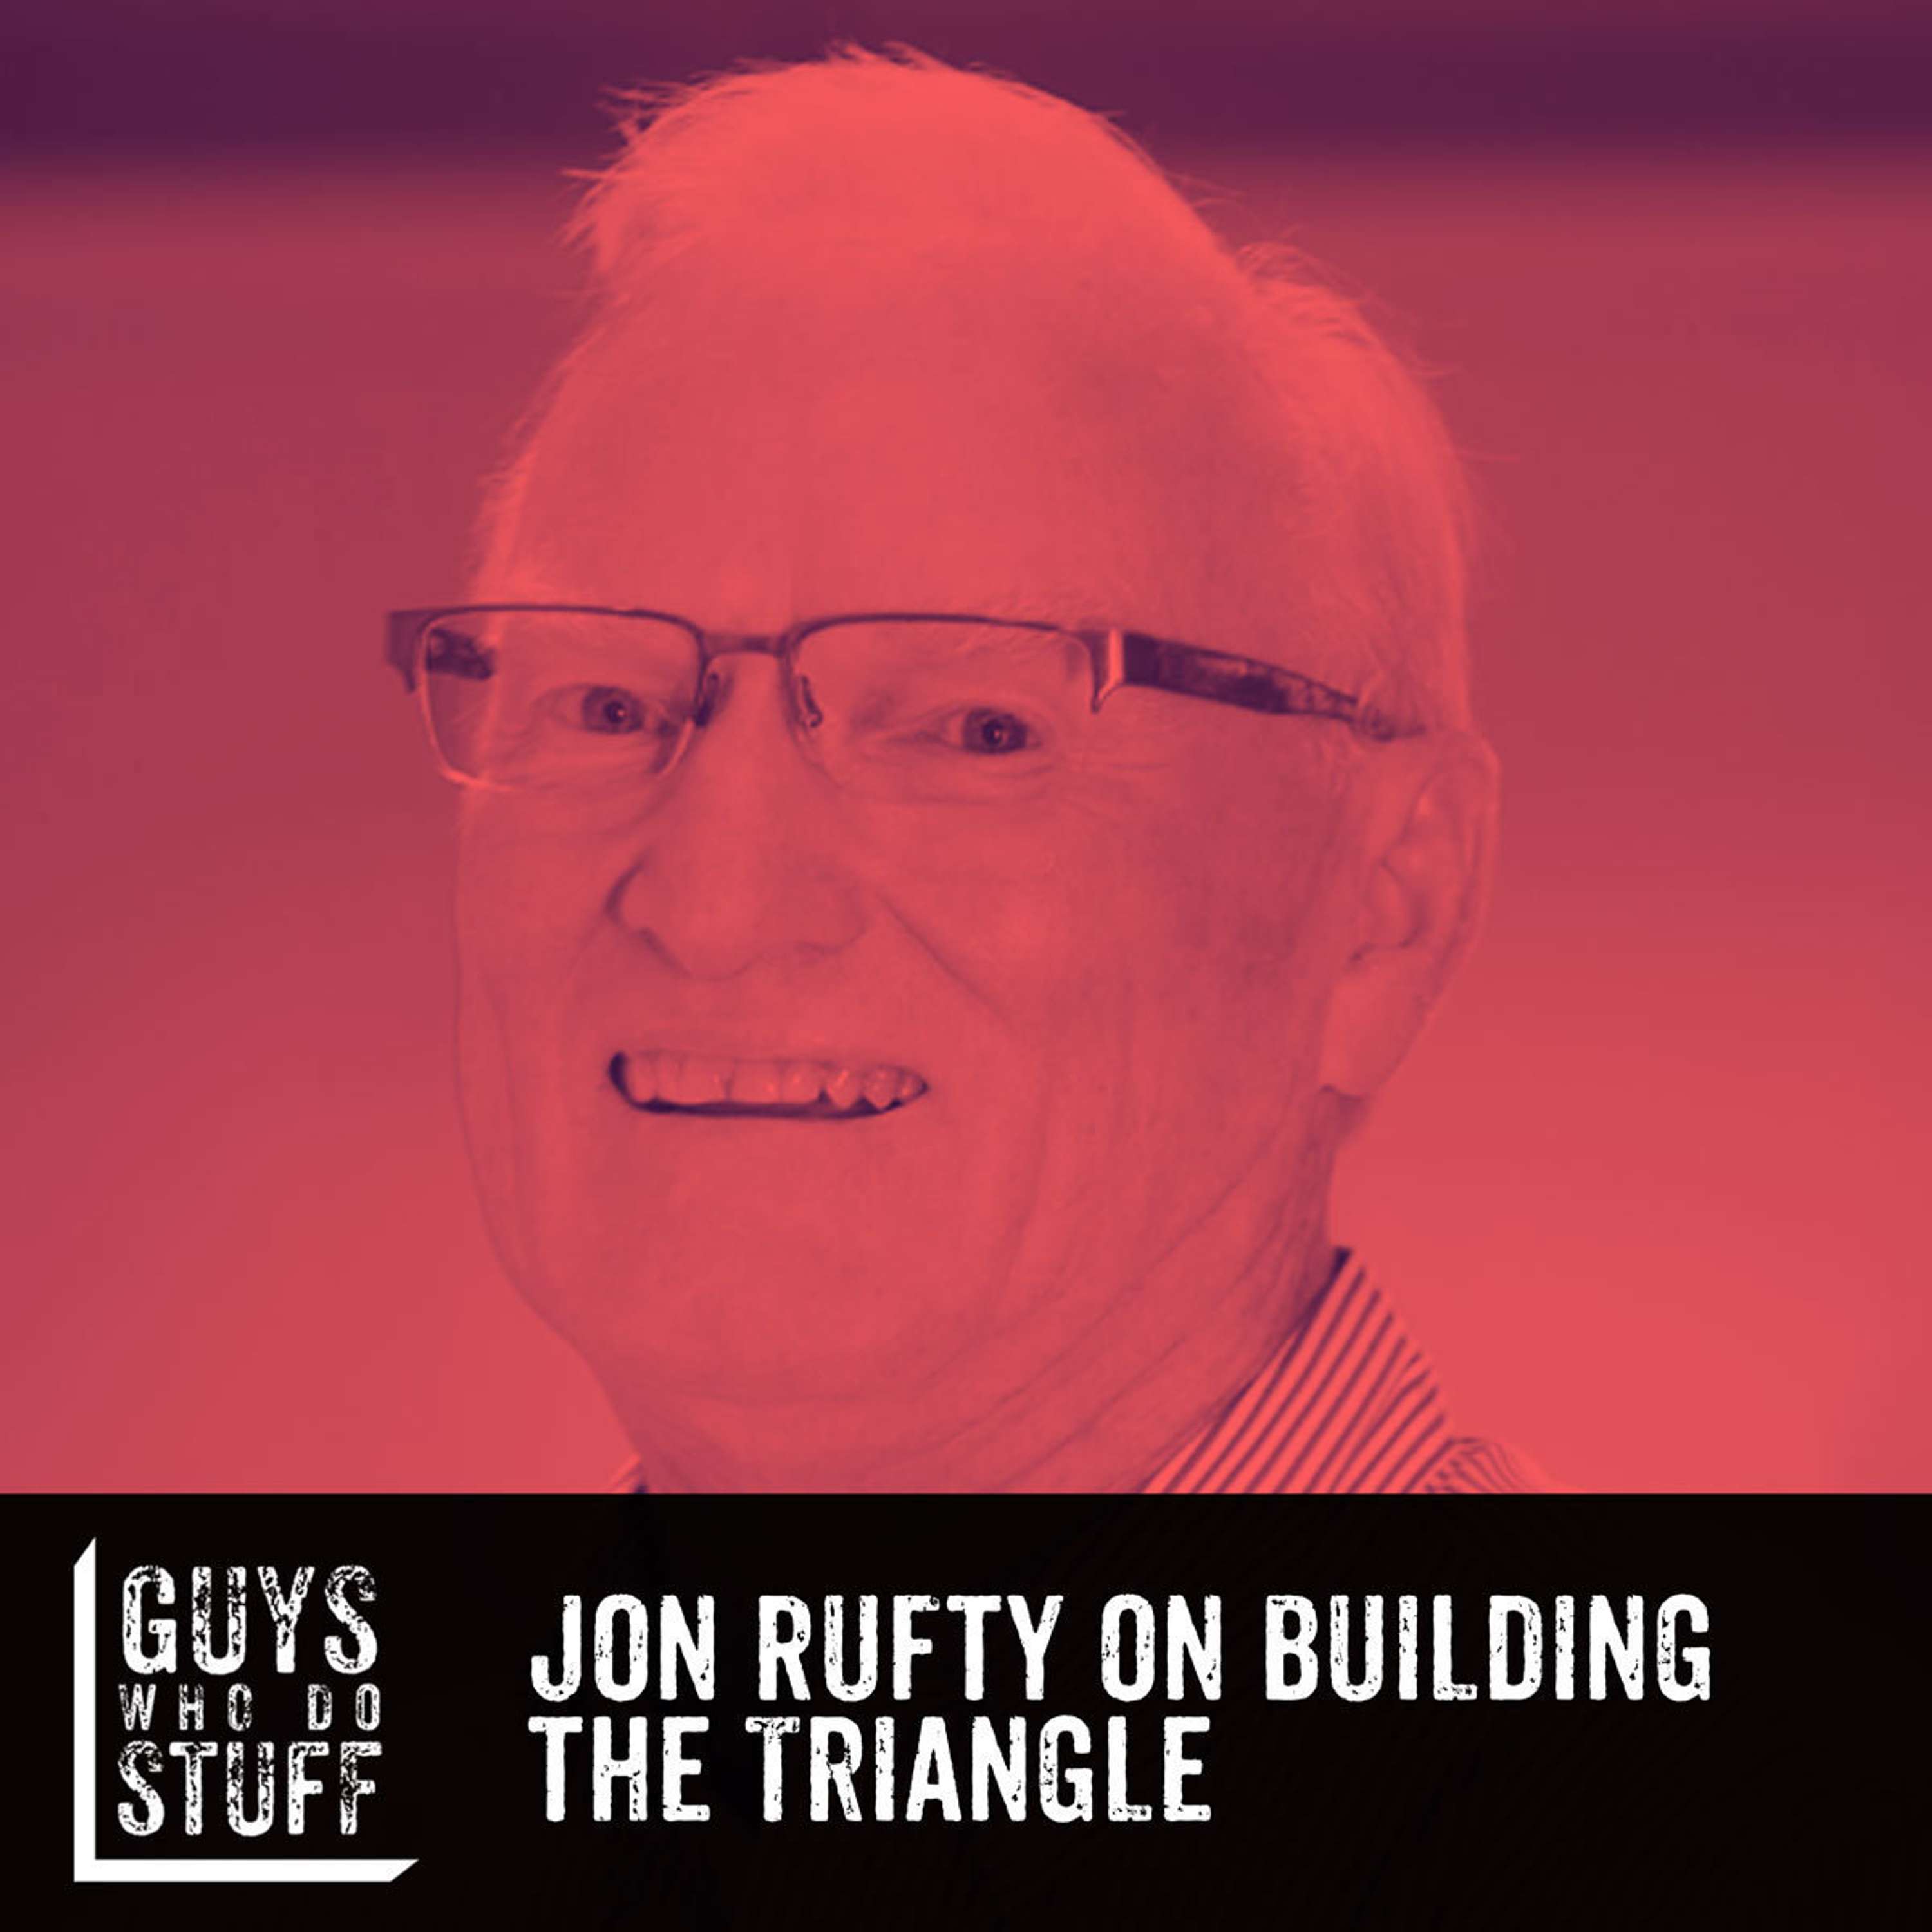 Jon Rufty on Building the Triangle